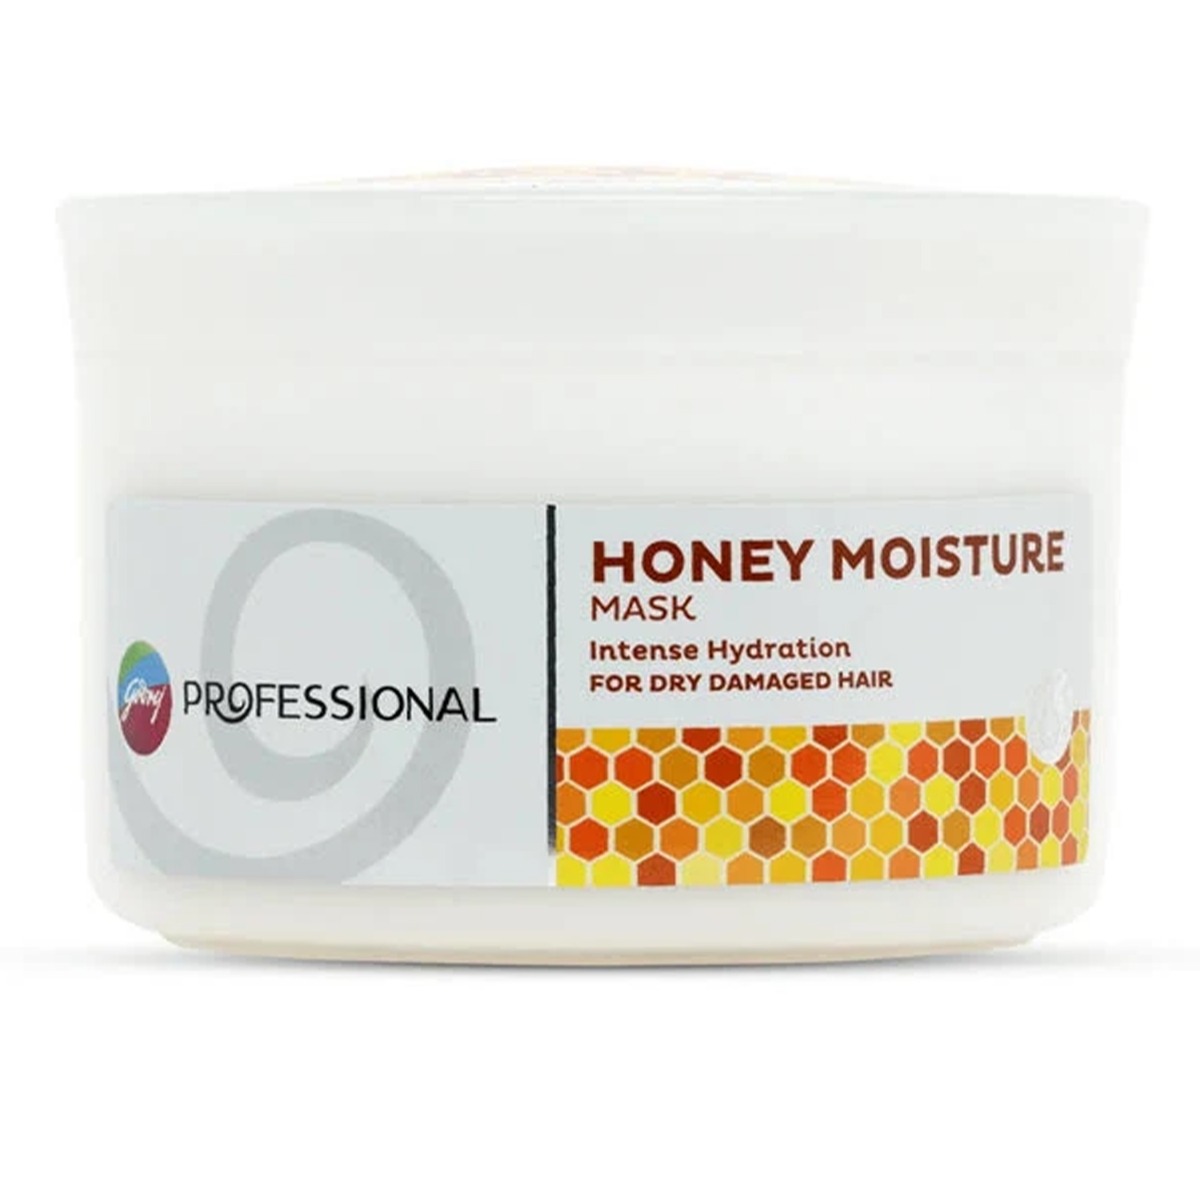 Godrej Professional Honey Moisture Hair Mask, 500gm